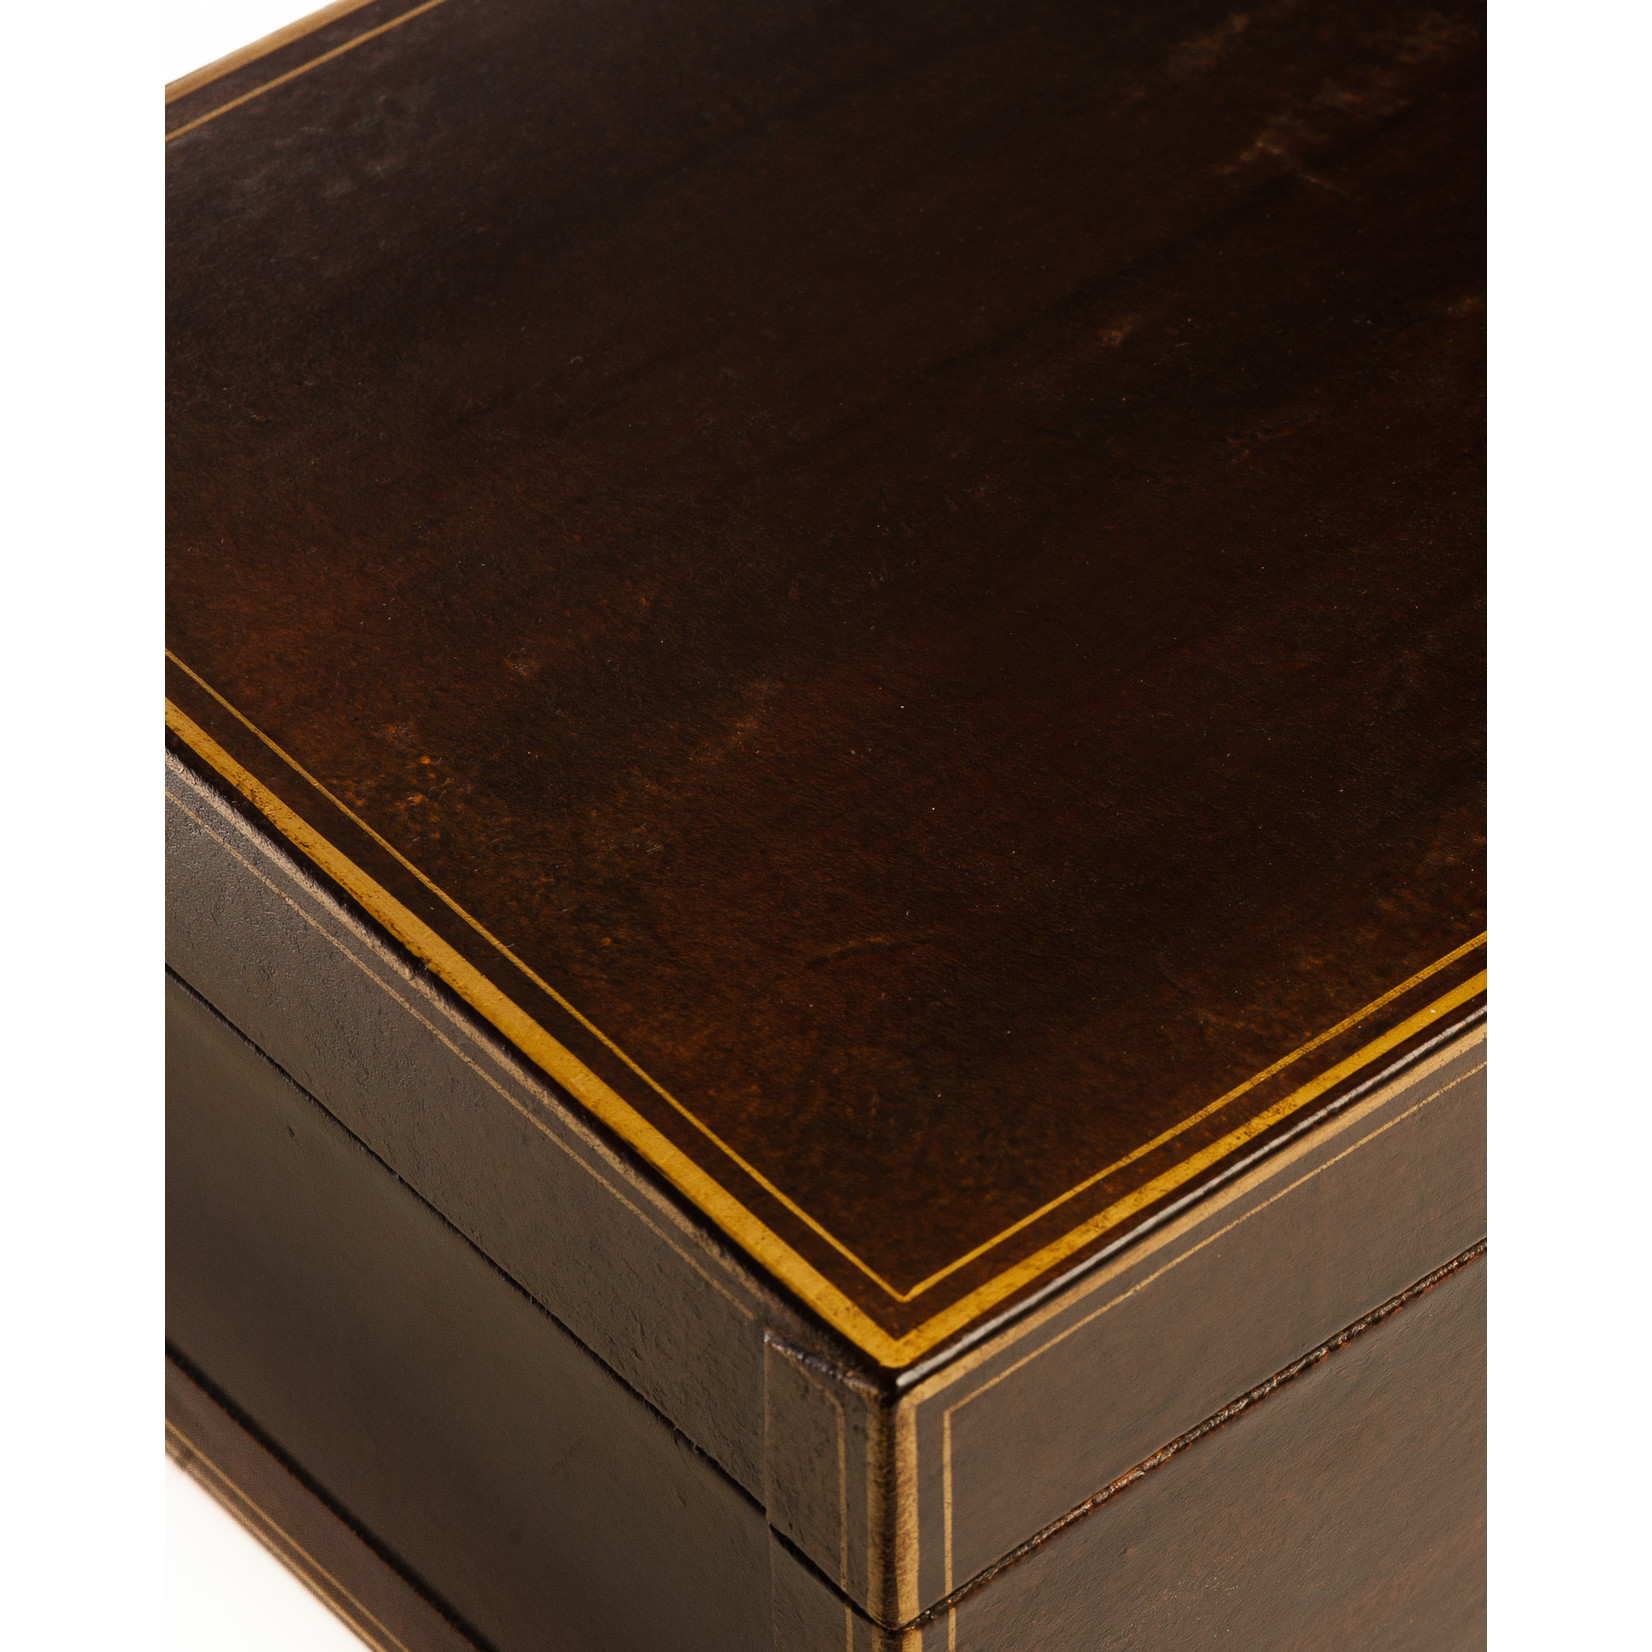 Lawrence & Scott Mahogany Regalia Leather Box(16.5") with Hand-Painted tuxedo gold trim